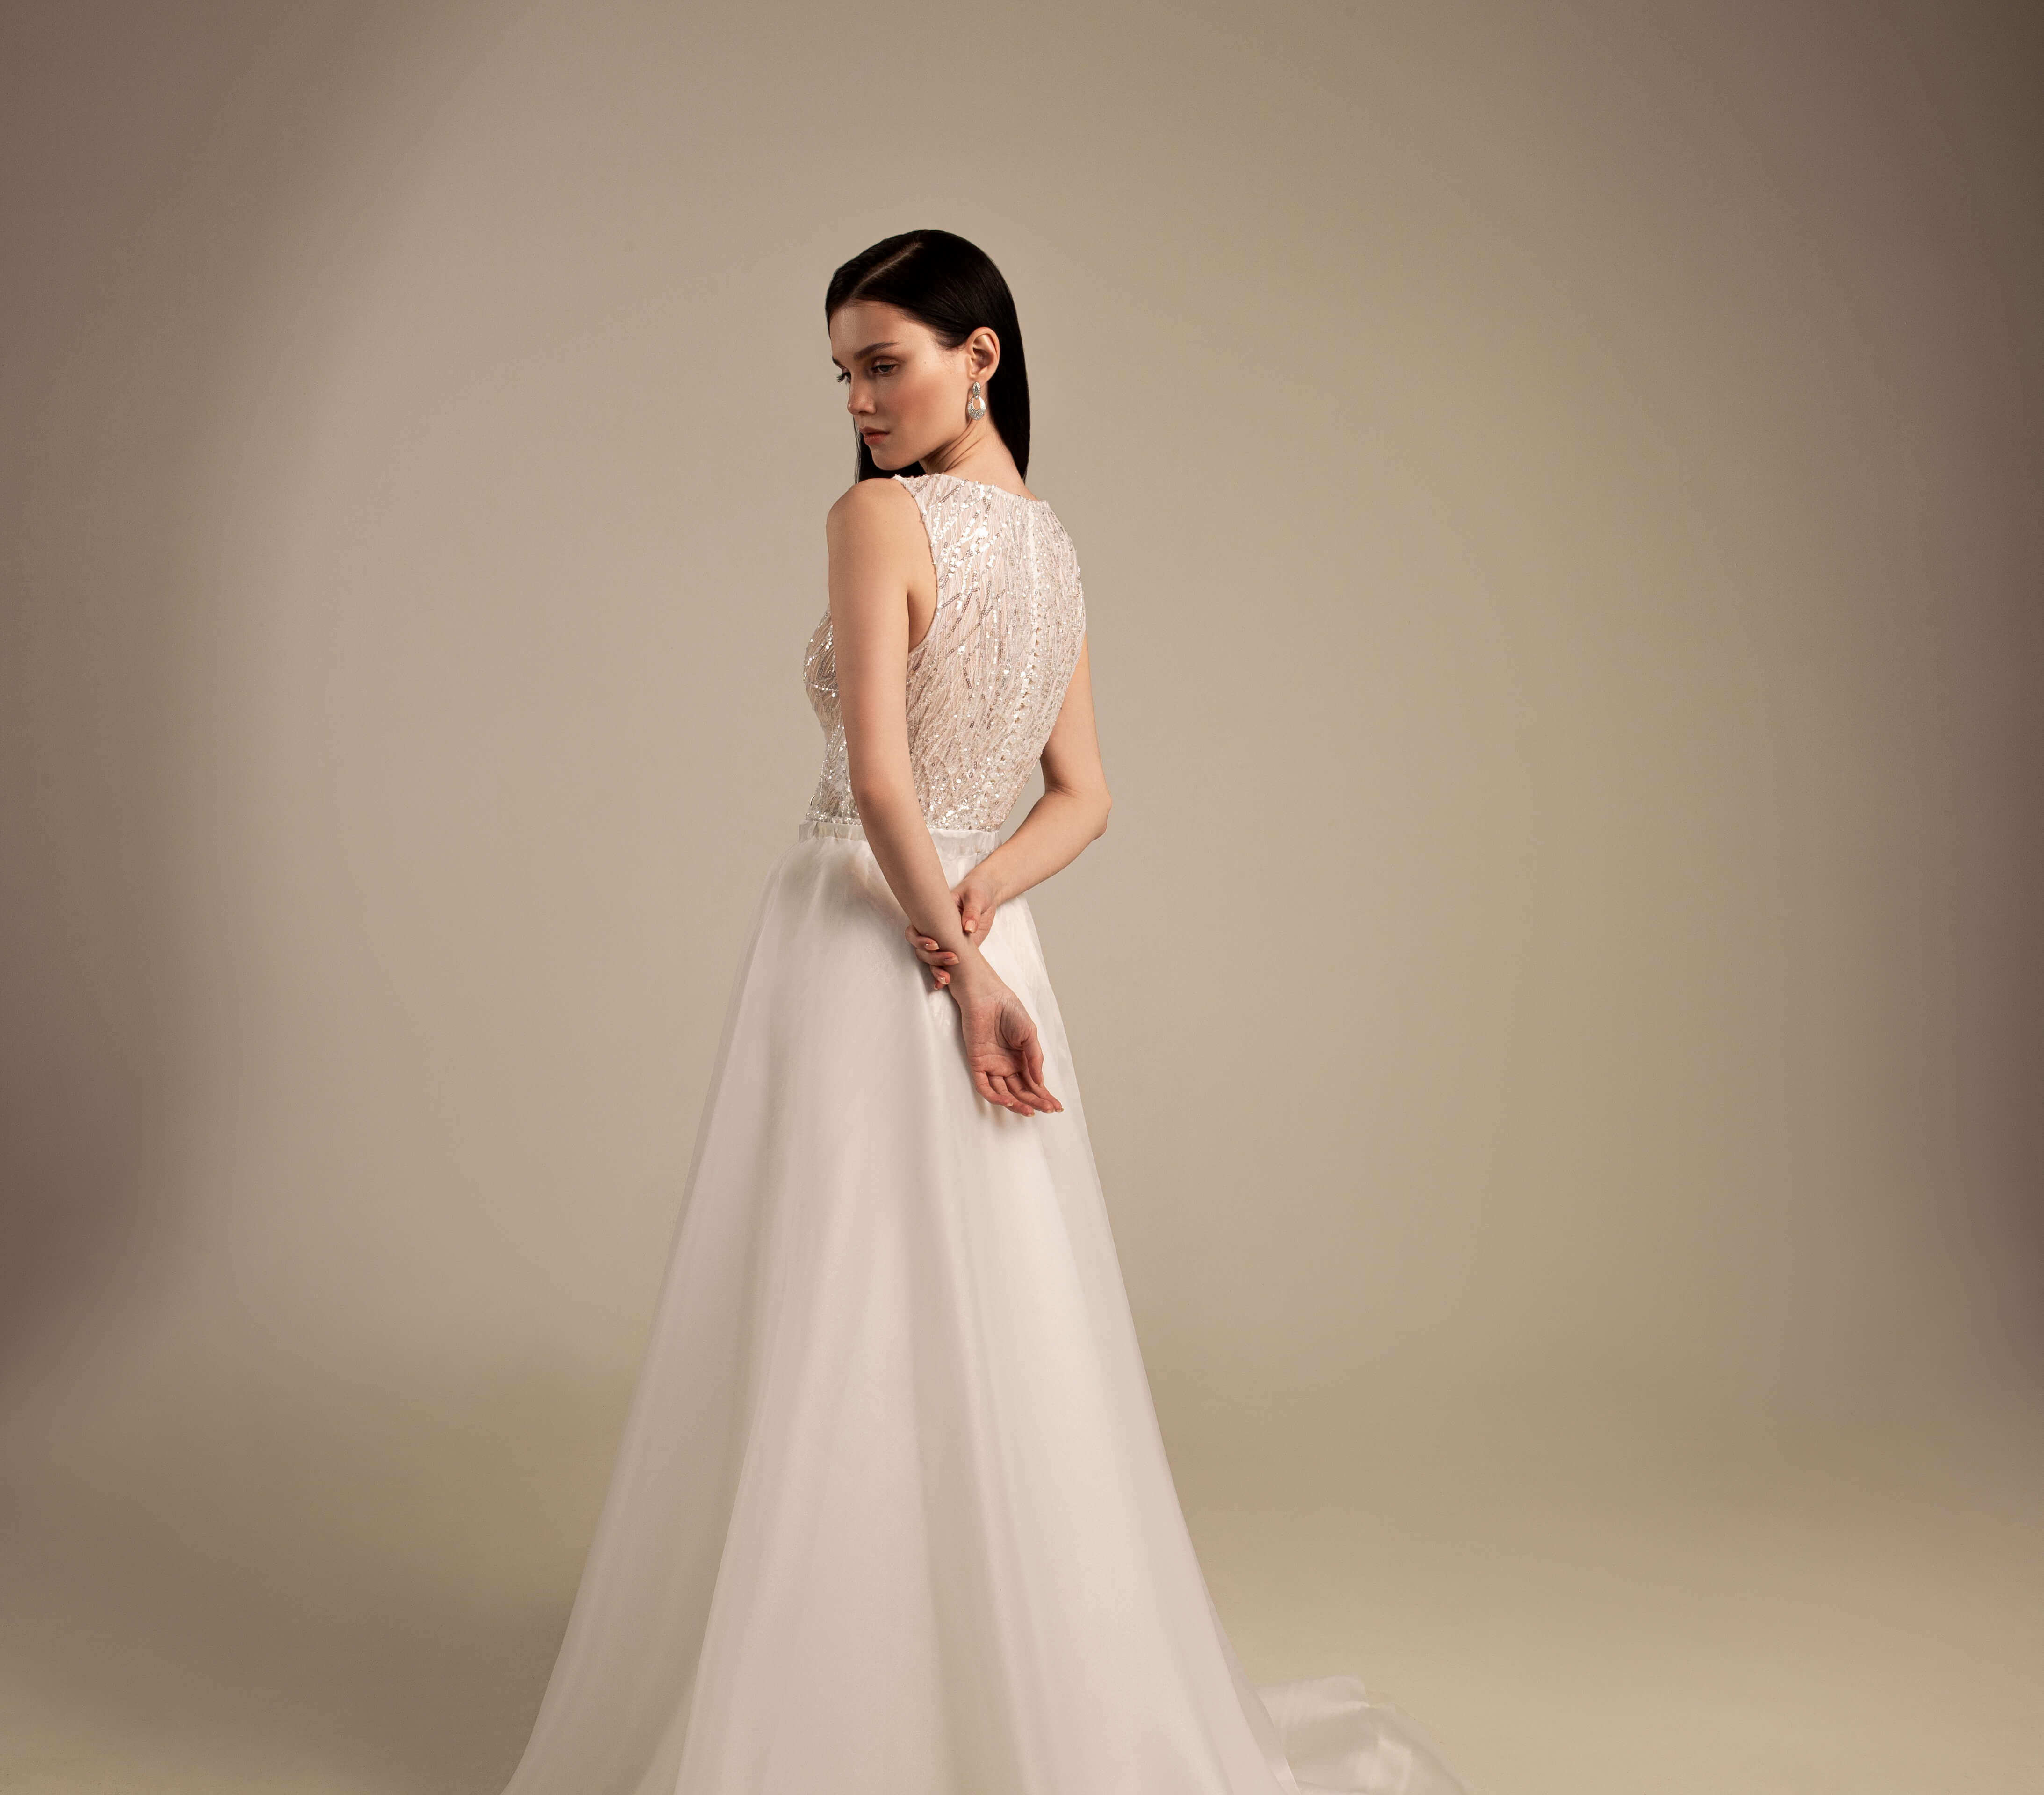 Luxury Embroidered Wedding Dress Lana Marinenko Jessica